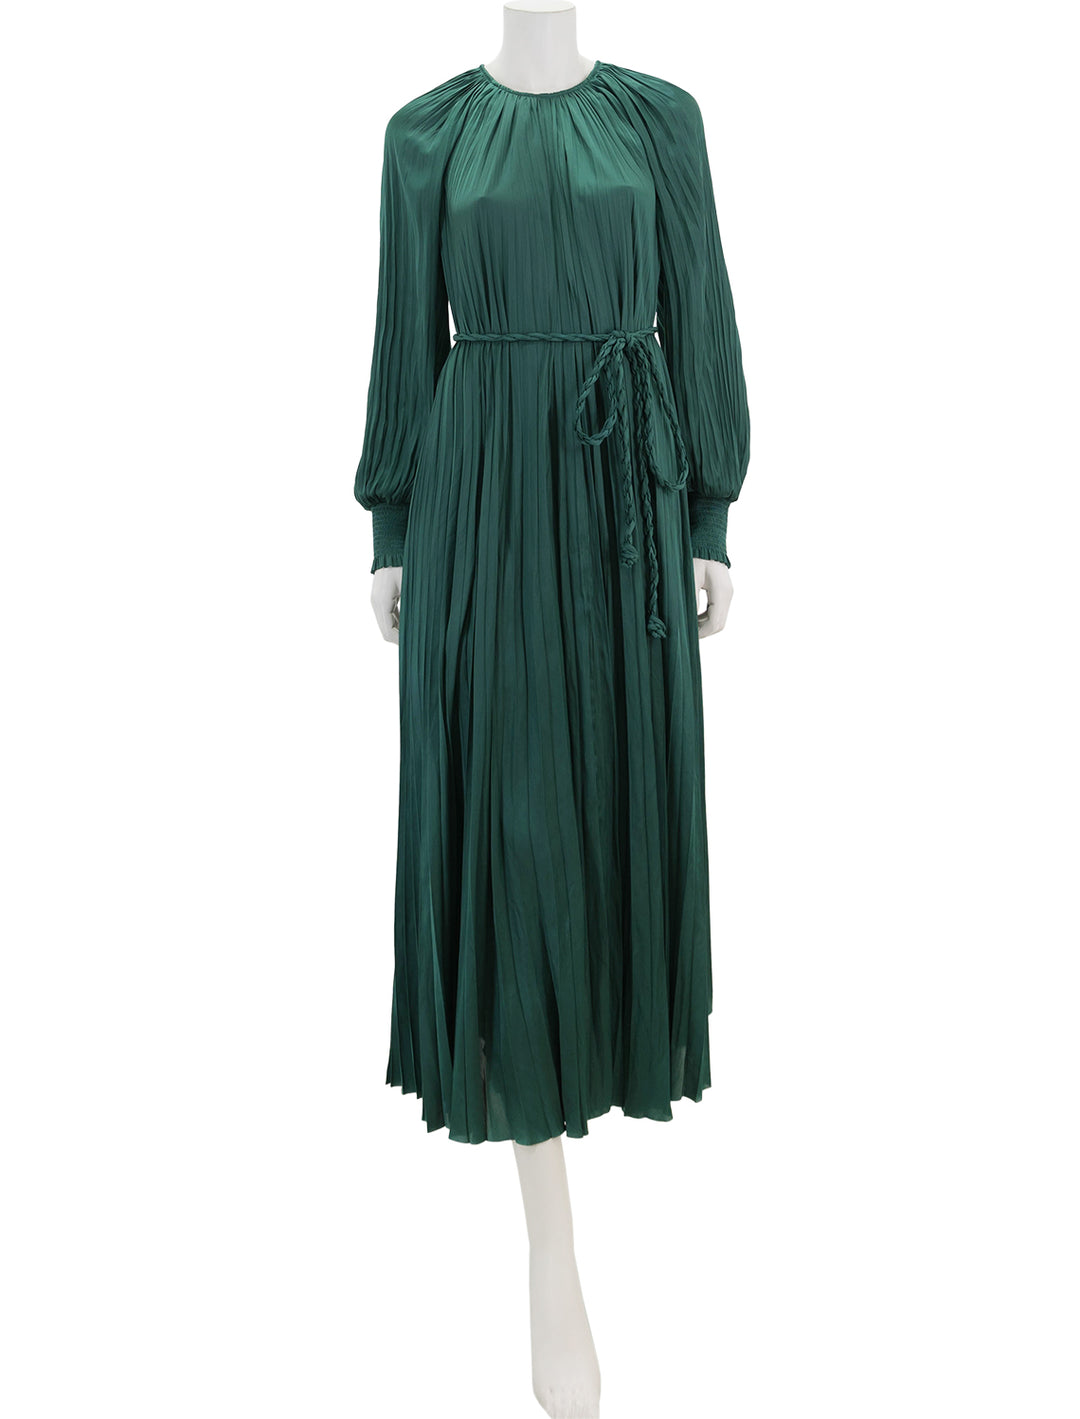 Front view of Ulla Johnson's zora dress in jadeite.